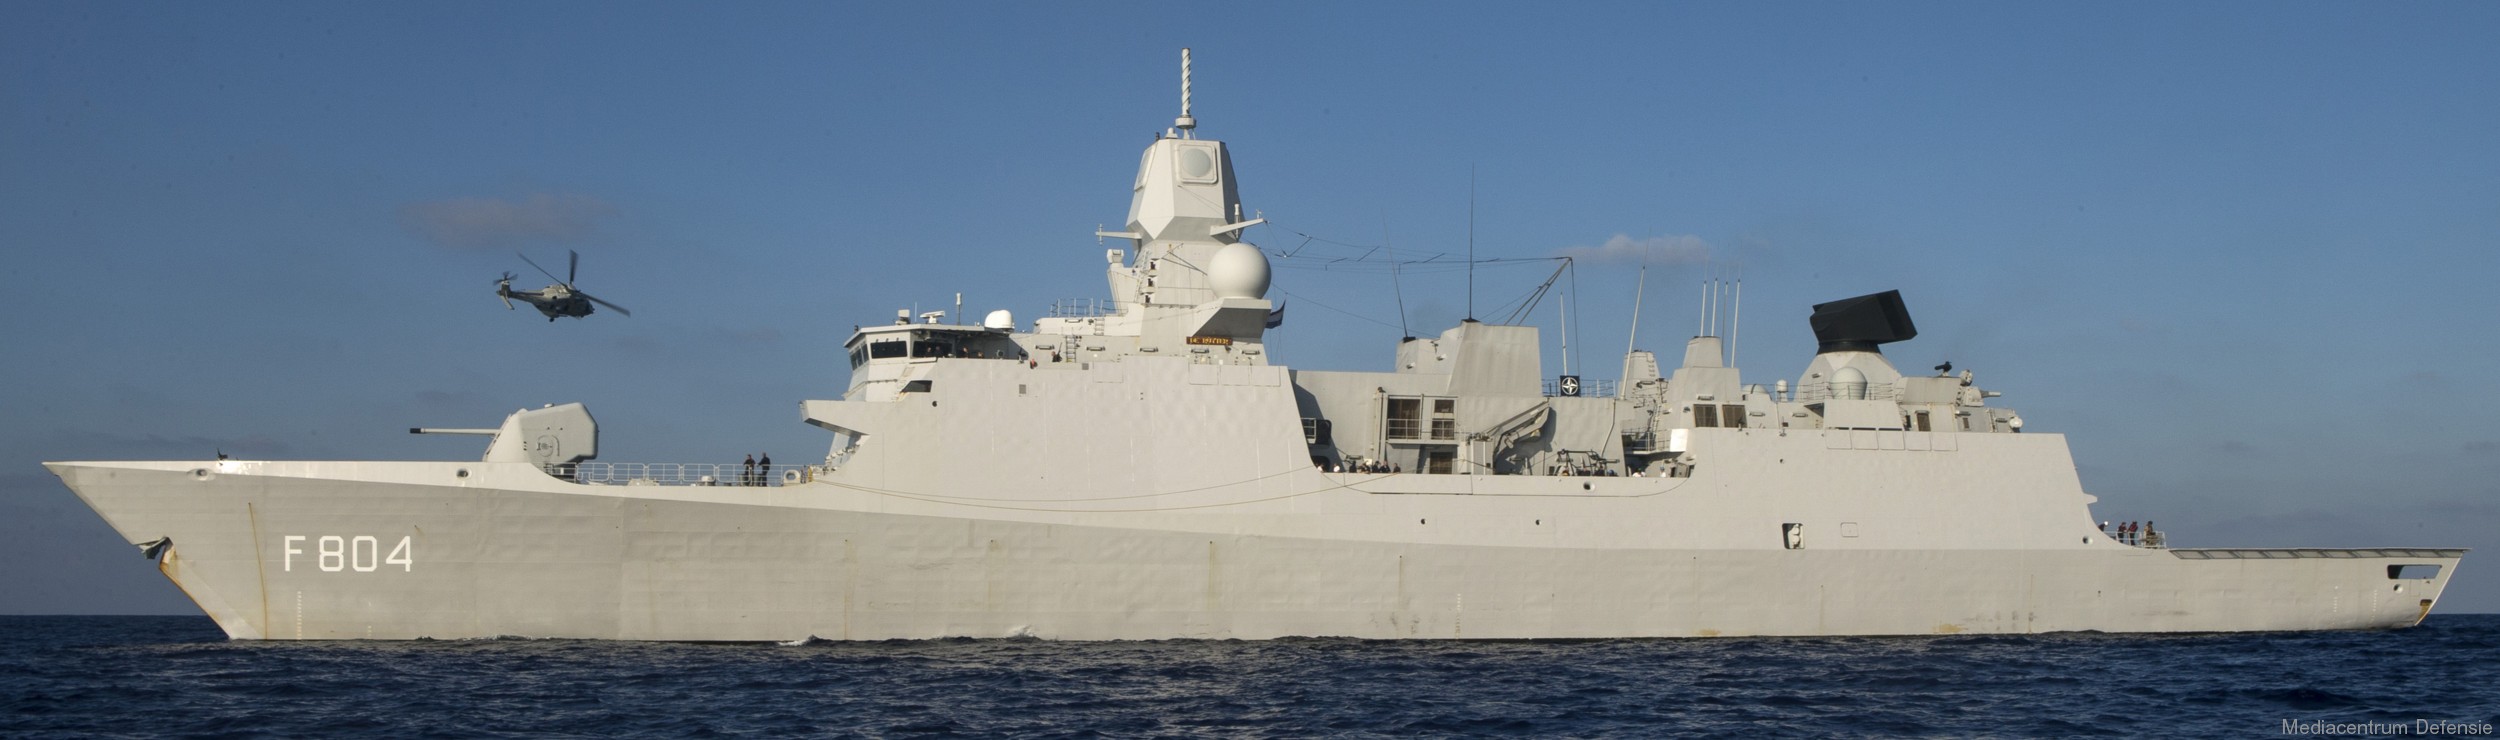 f-804 hnlms de ruyter guided missile frigate ffg lcf royal netherlands navy 08